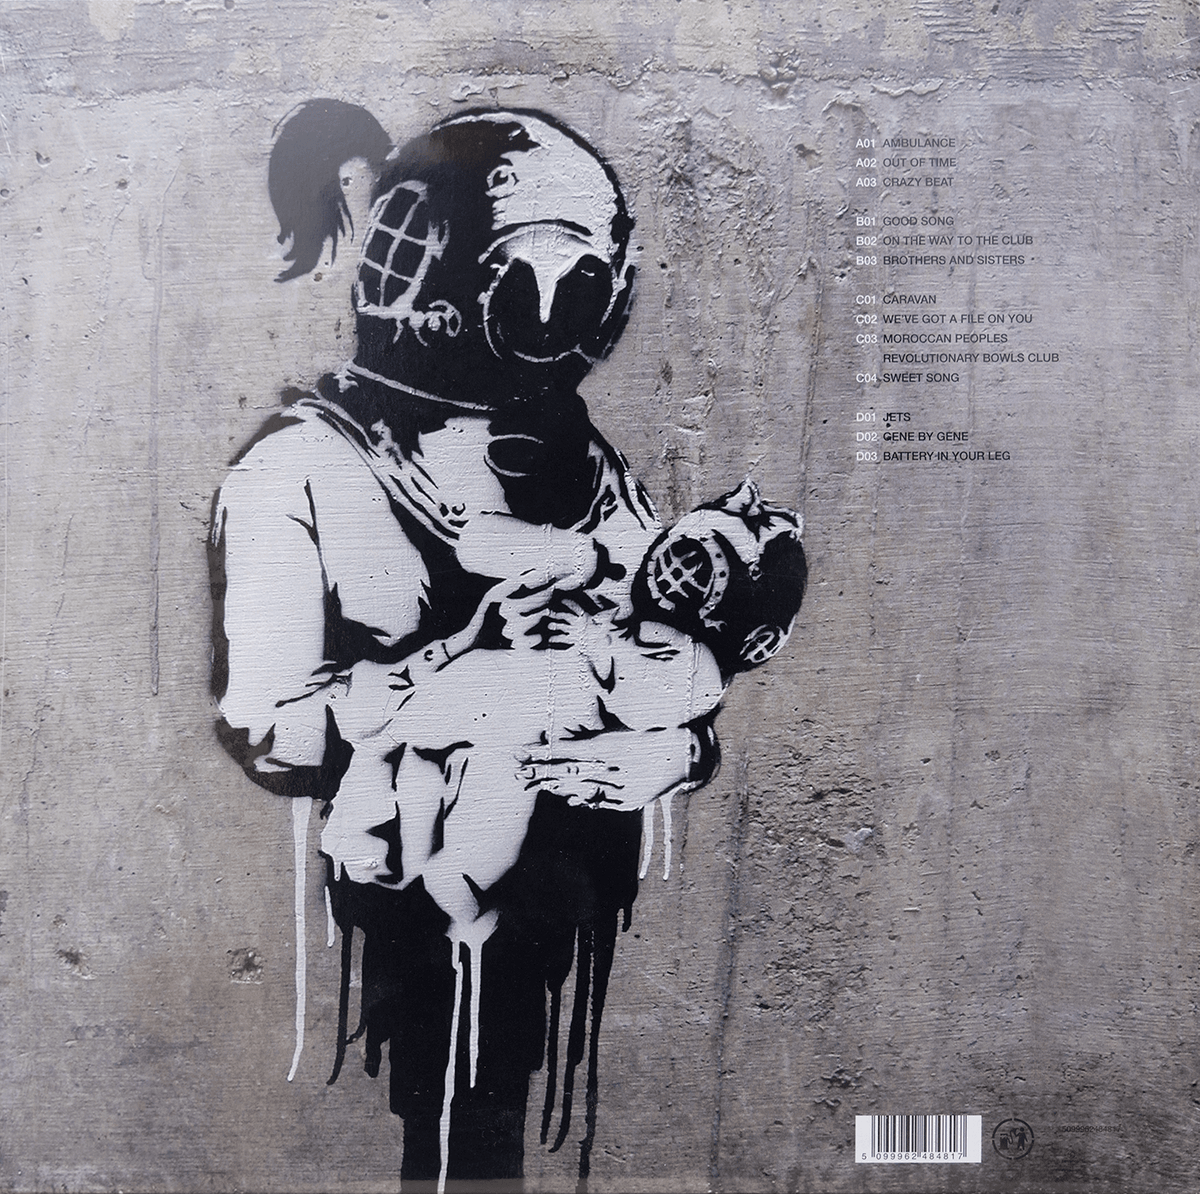 Blur – Think Tank Vinyl LP (Original 2 x 12